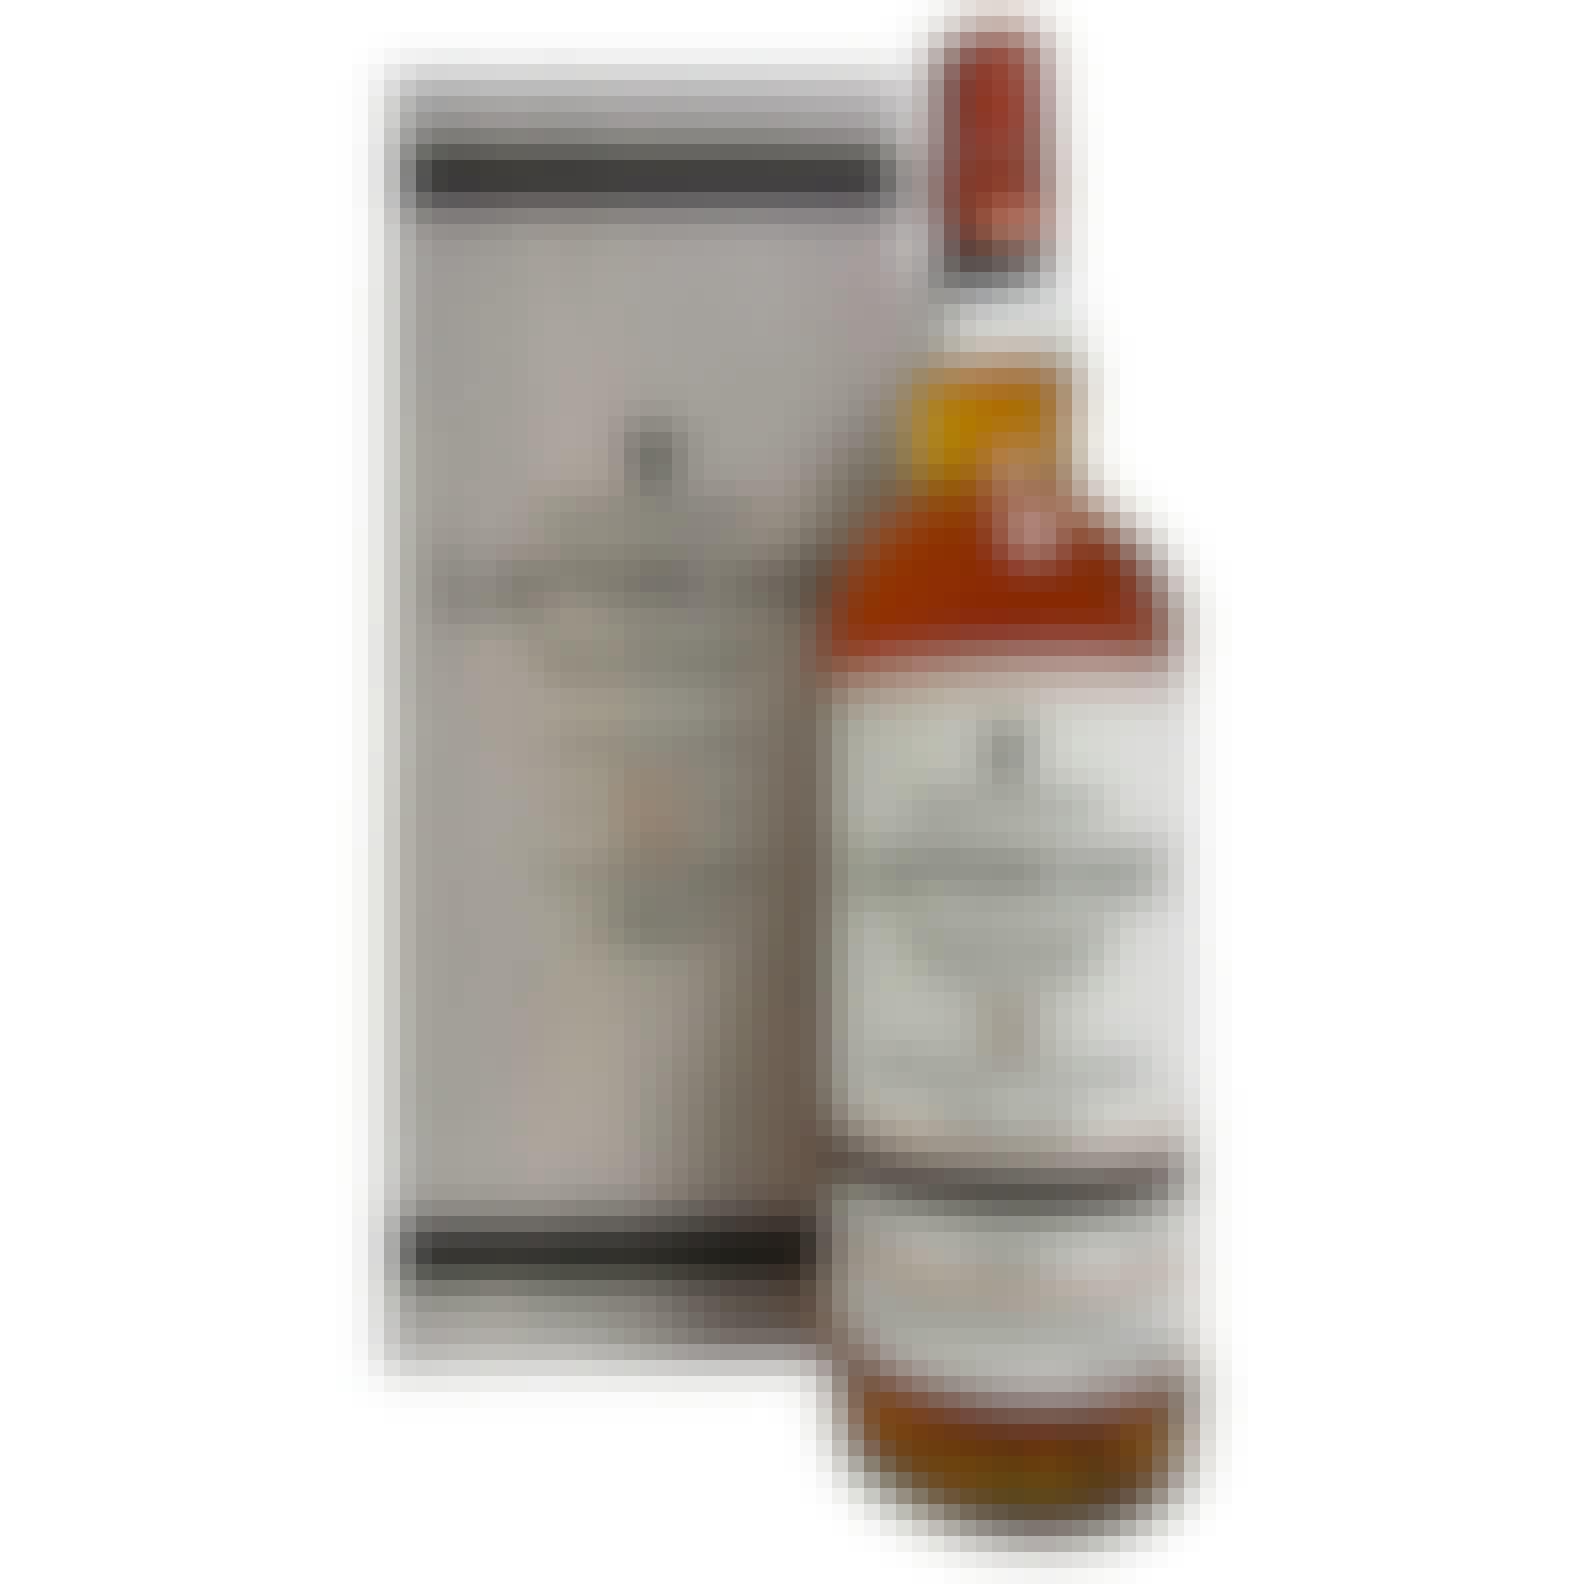 Laphroaig Islay Single Malt Scotch Whisky 32 year old 750ml